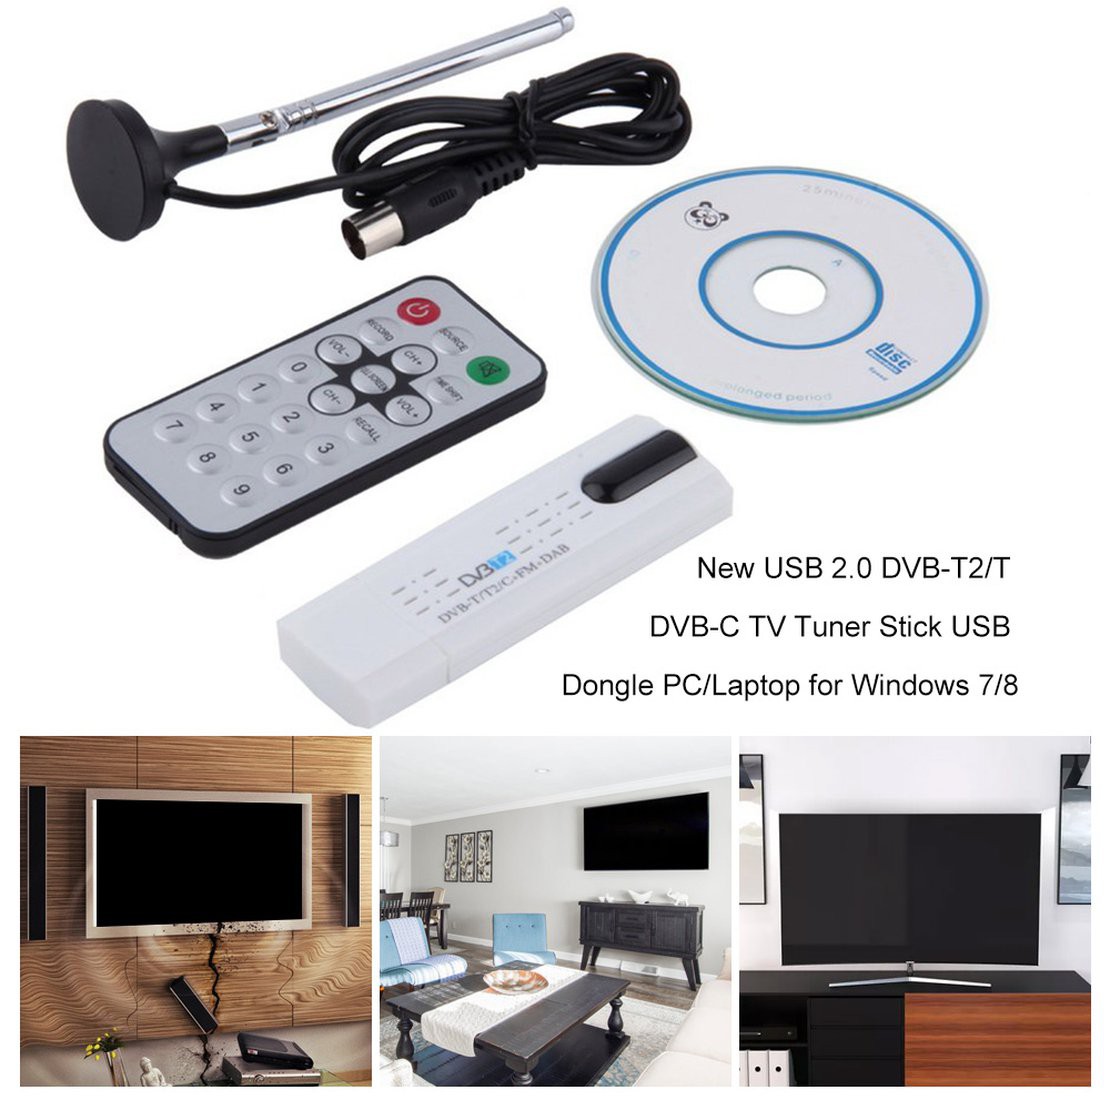 Usb Dongle Tv 99new Usb 2.0 Dvb-T2 / T Dvb-C Cho Windows 7 / 8